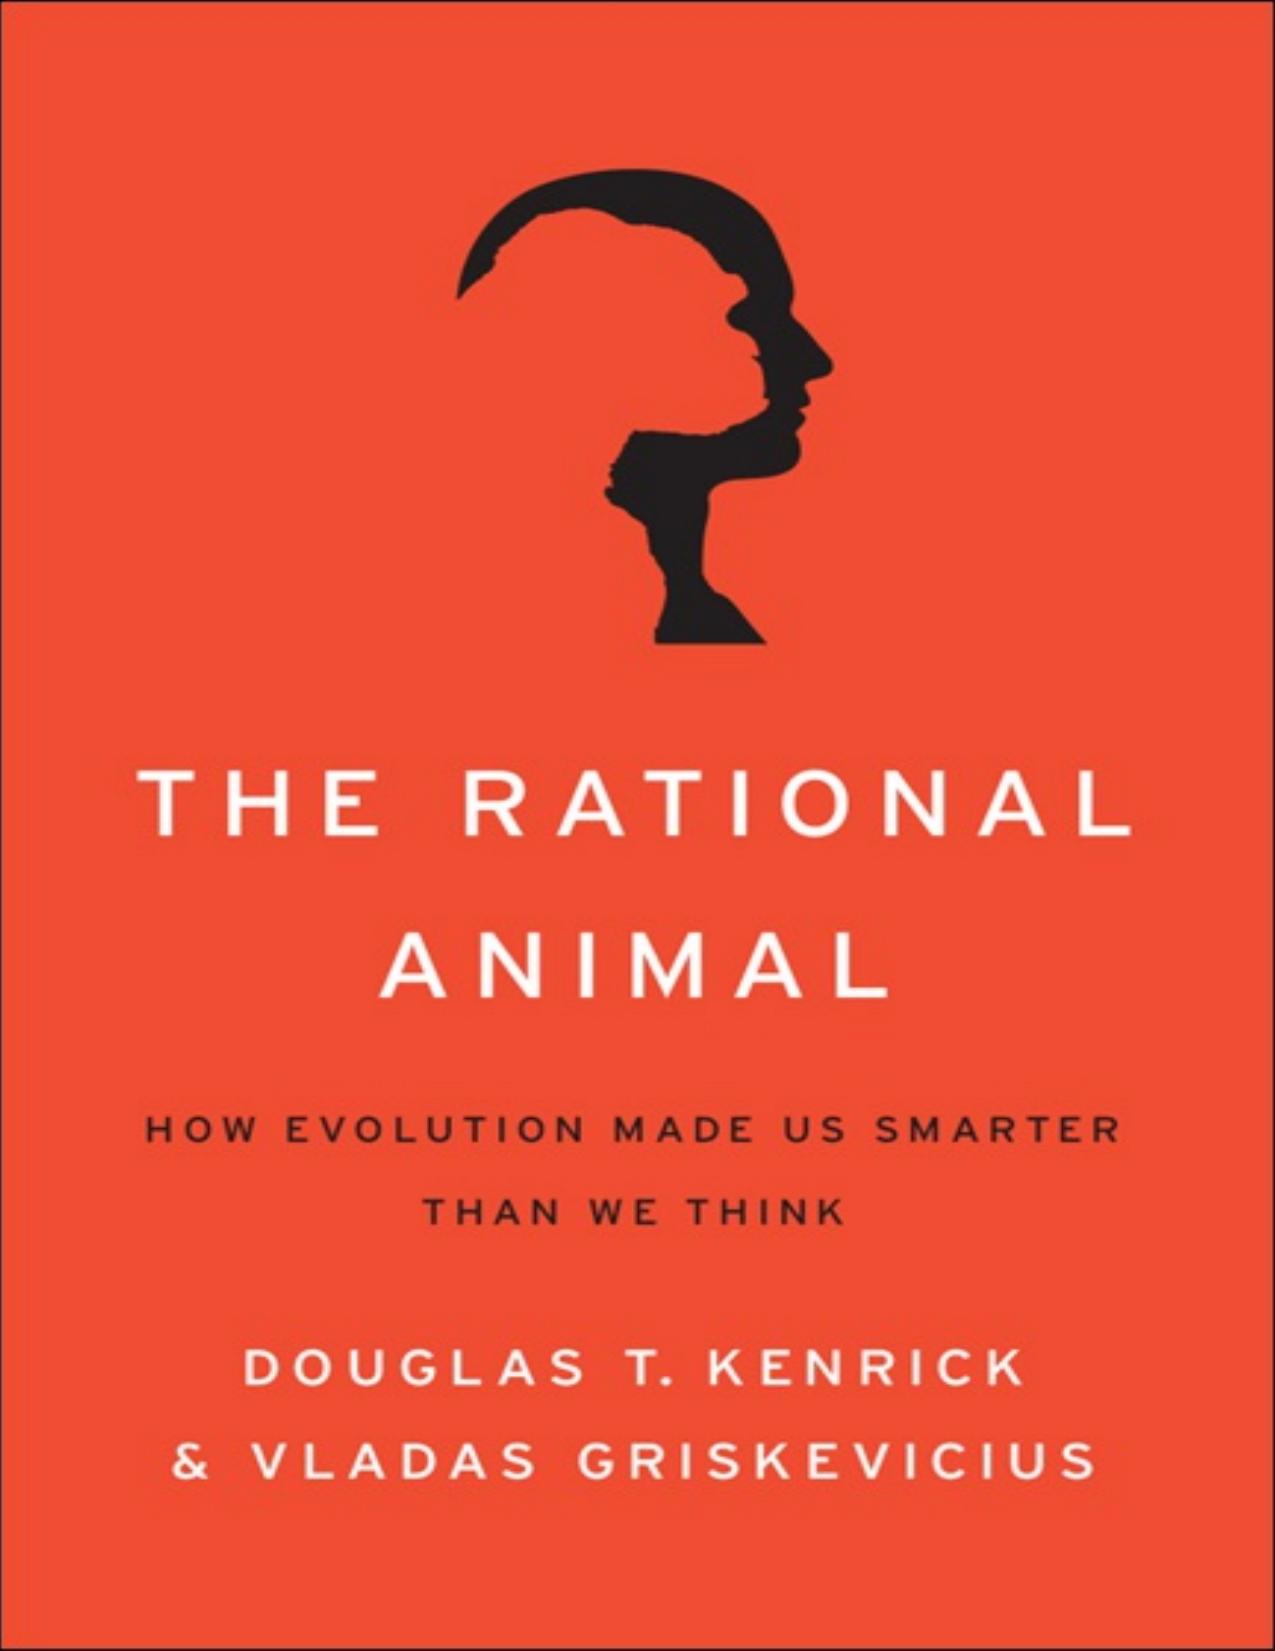 Douglas T. Kenrick Vladas Griskevicius The Rational Animal How Evolution Made Us Smarter Than We Think Basic Books.jpg